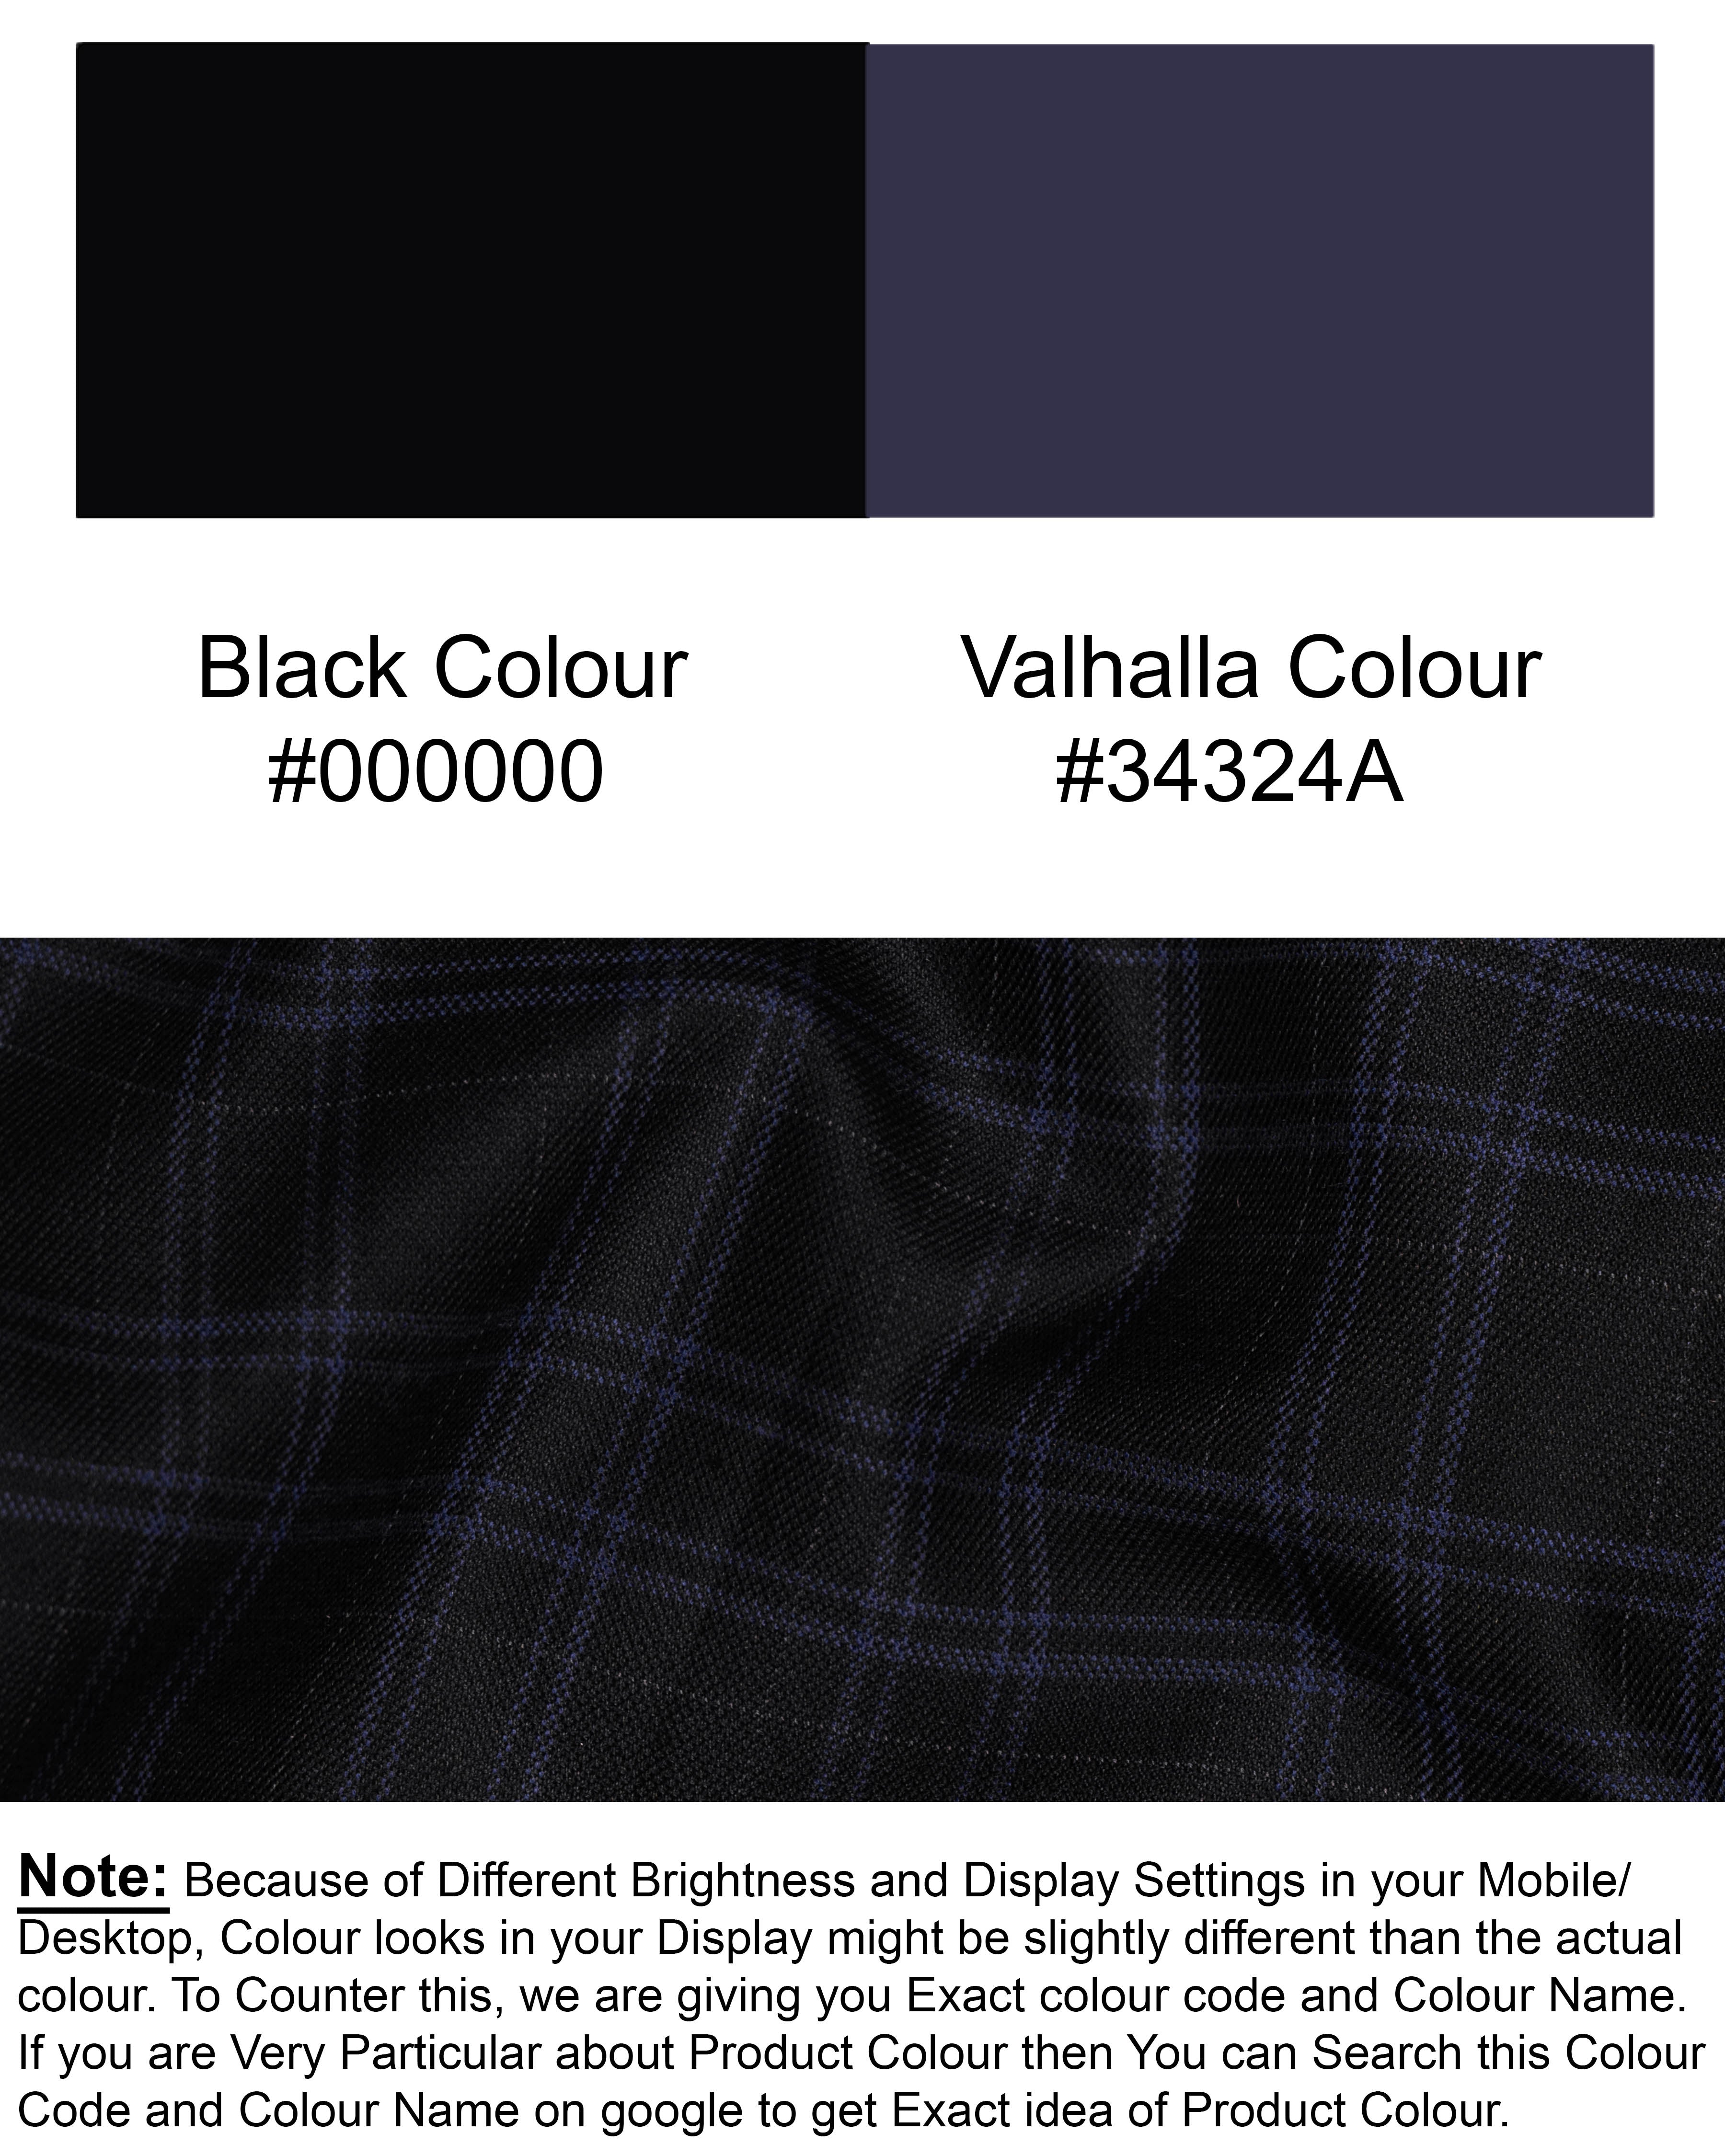 Jet Black and Valhalla Violet Plaid Woolrich Waistcoat V1556-36, V1556-38, V1556-40, V1556-42, V1556-44, V1556-46, V1556-48, V1556-50, V1556-52, V1556-54, V1556-56, V1556-58, V1556-60